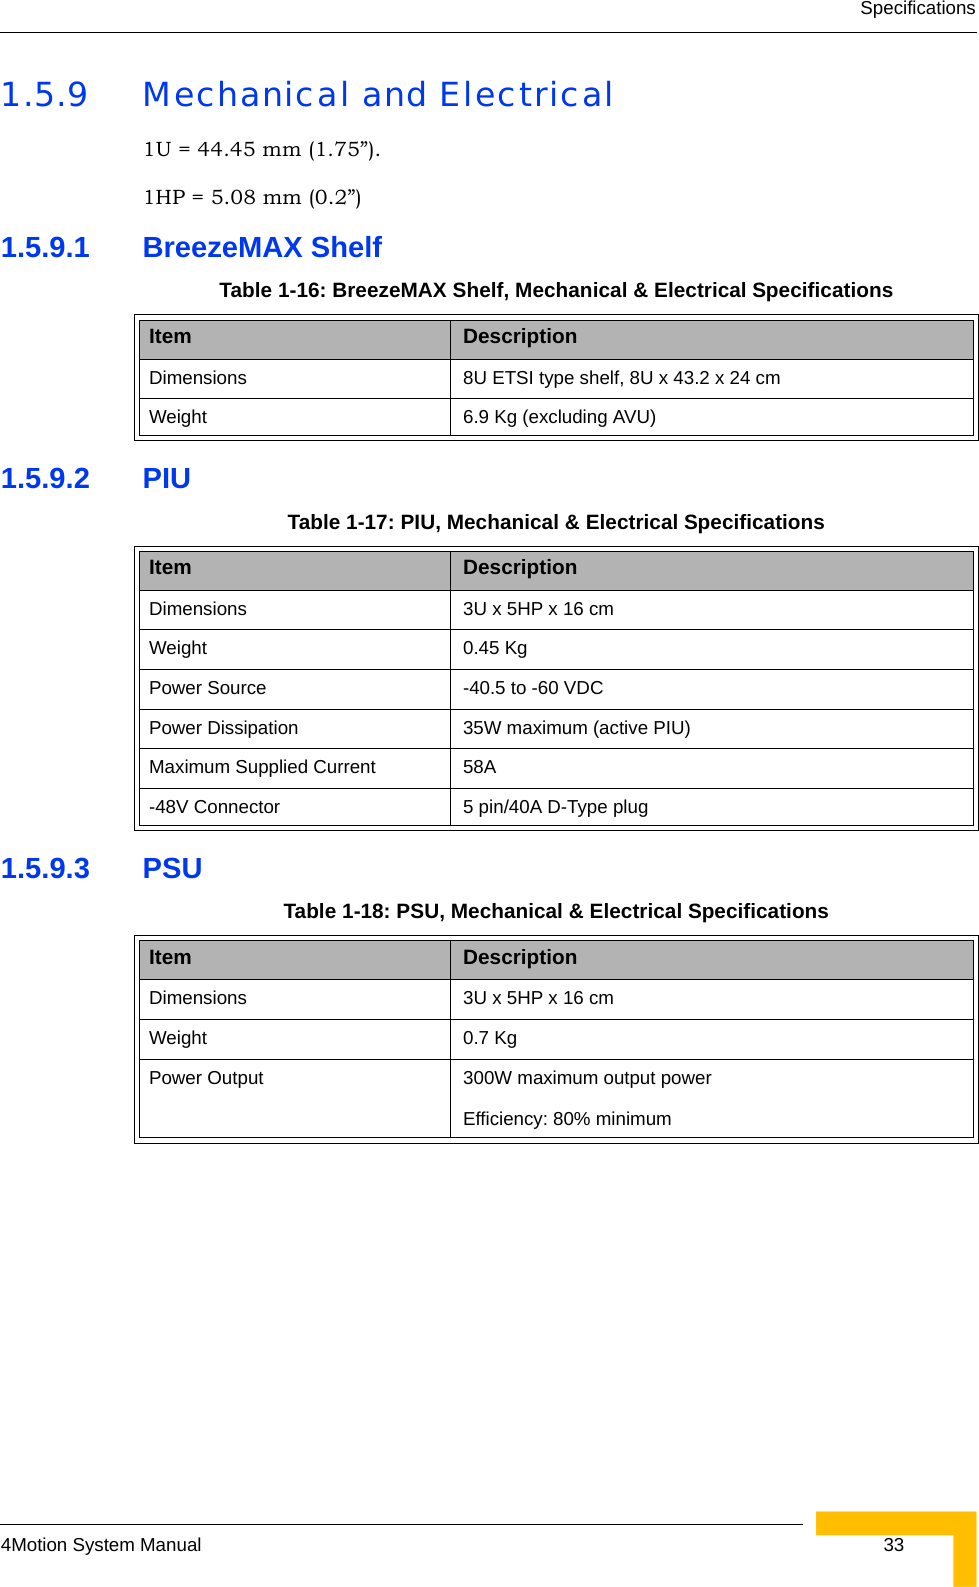 Specifications4Motion System Manual  331.5.9 Mechanical and Electrical1U = 44.45 mm (1.75”).1HP = 5.08 mm (0.2”)1.5.9.1 BreezeMAX Shelf1.5.9.2 PIU1.5.9.3 PSUTable 1-16: BreezeMAX Shelf, Mechanical &amp; Electrical SpecificationsItem DescriptionDimensions 8U ETSI type shelf, 8U x 43.2 x 24 cmWeight 6.9 Kg (excluding AVU)Table 1-17: PIU, Mechanical &amp; Electrical SpecificationsItem DescriptionDimensions 3U x 5HP x 16 cmWeight 0.45 KgPower Source -40.5 to -60 VDCPower Dissipation 35W maximum (active PIU)Maximum Supplied Current 58A-48V Connector 5 pin/40A D-Type plugTable 1-18: PSU, Mechanical &amp; Electrical SpecificationsItem DescriptionDimensions 3U x 5HP x 16 cmWeight 0.7 KgPower Output 300W maximum output powerEfficiency: 80% minimum